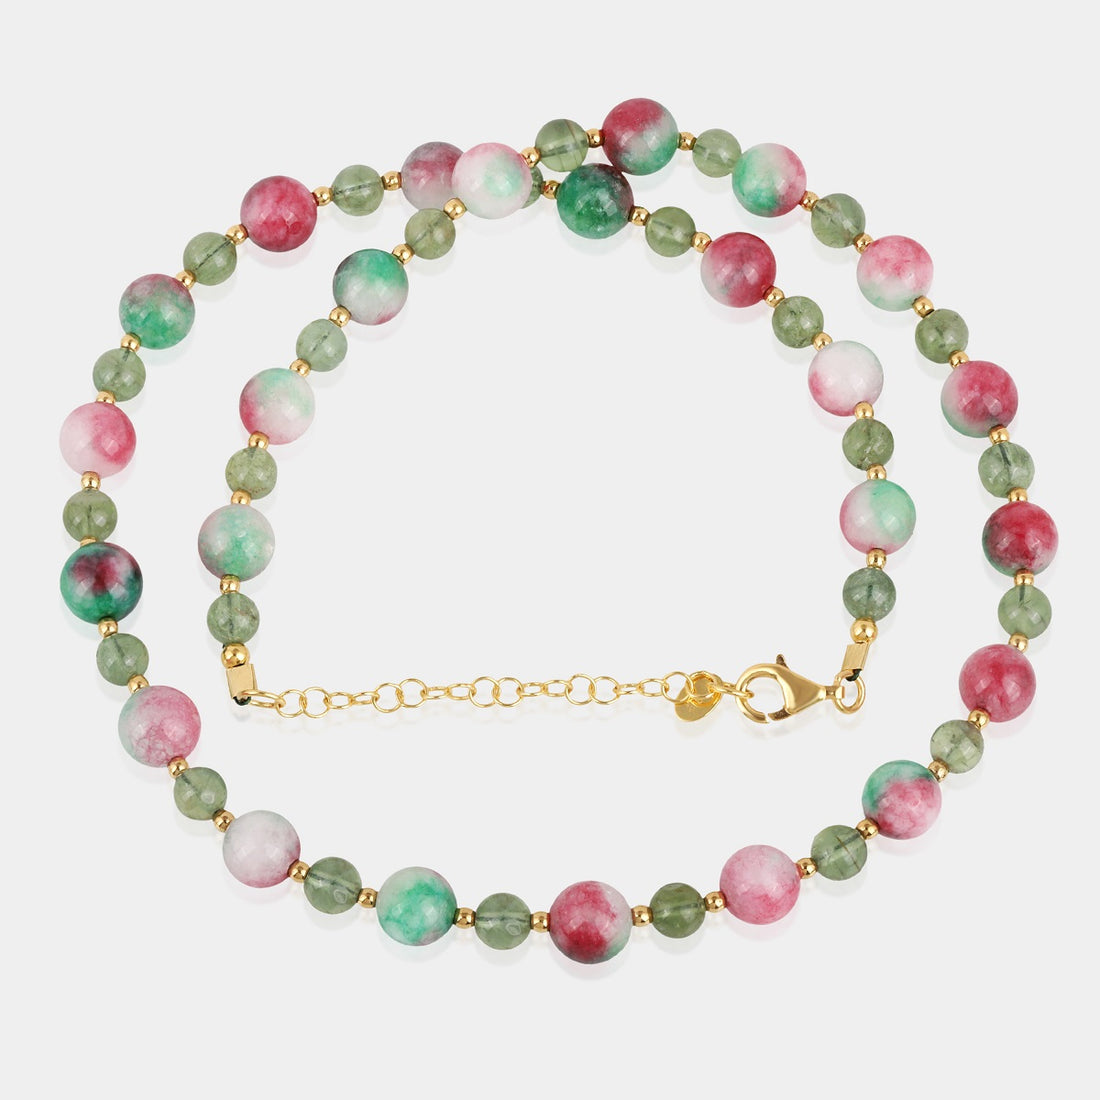 Handmade 925 silver necklace adorned with Strawberry Quartz, Green Apatite, and Hematite gemstone beads